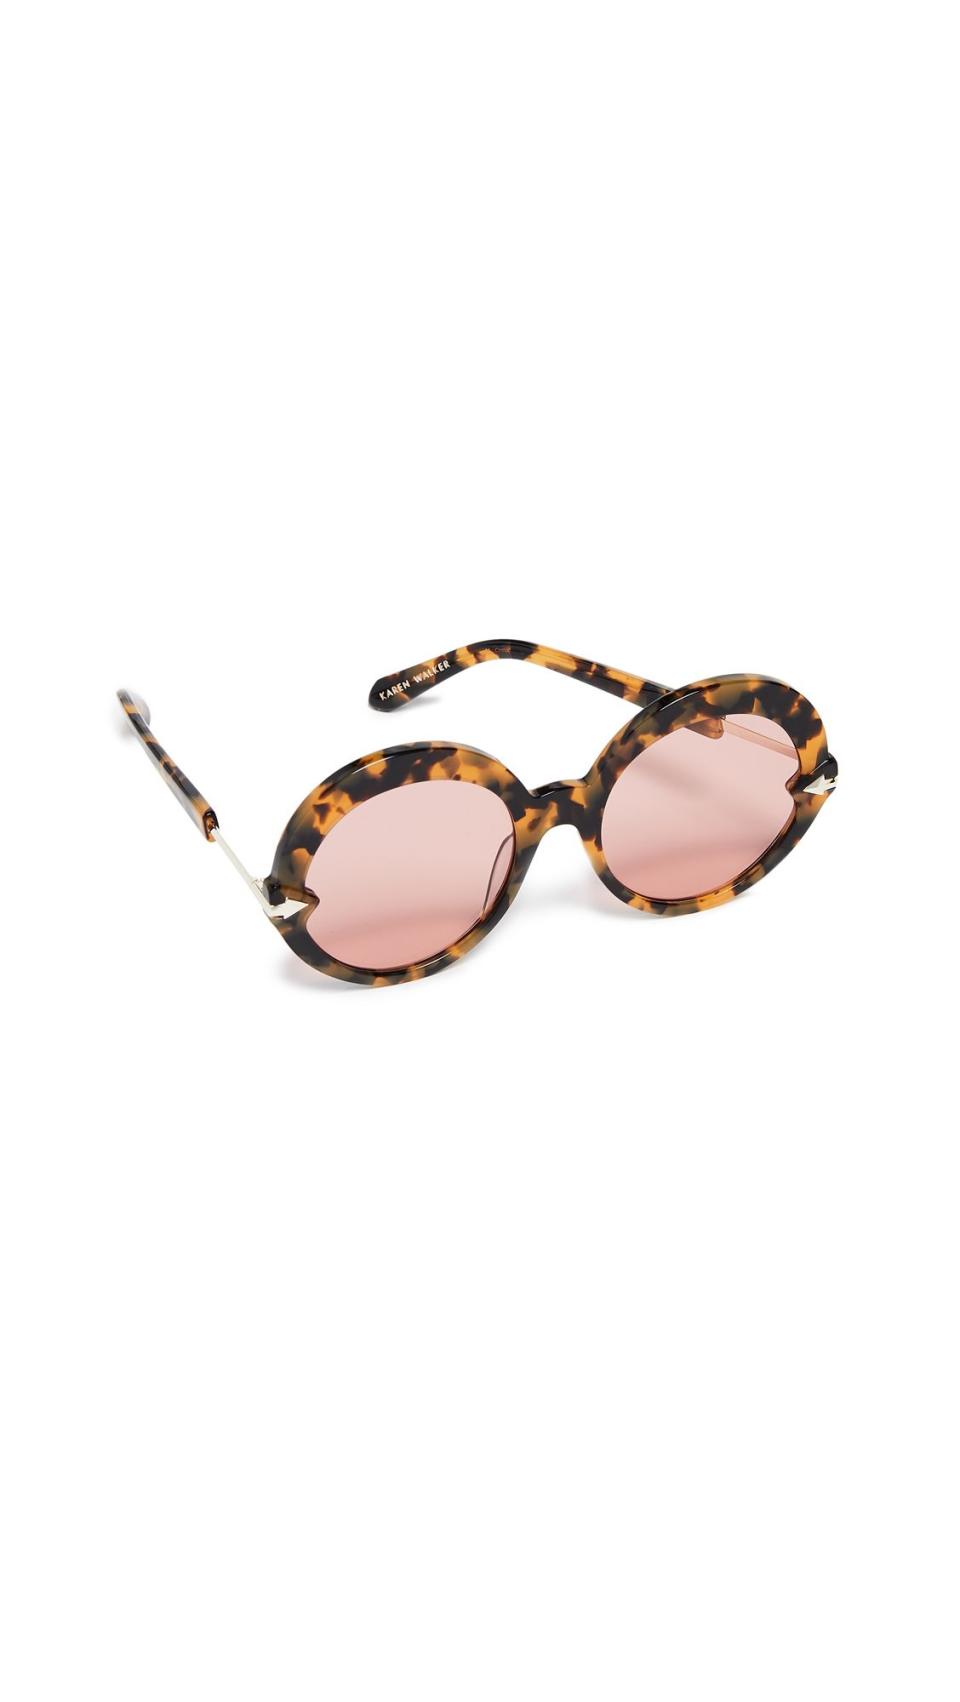 16) If You Like Thick-Framed Sunglasses